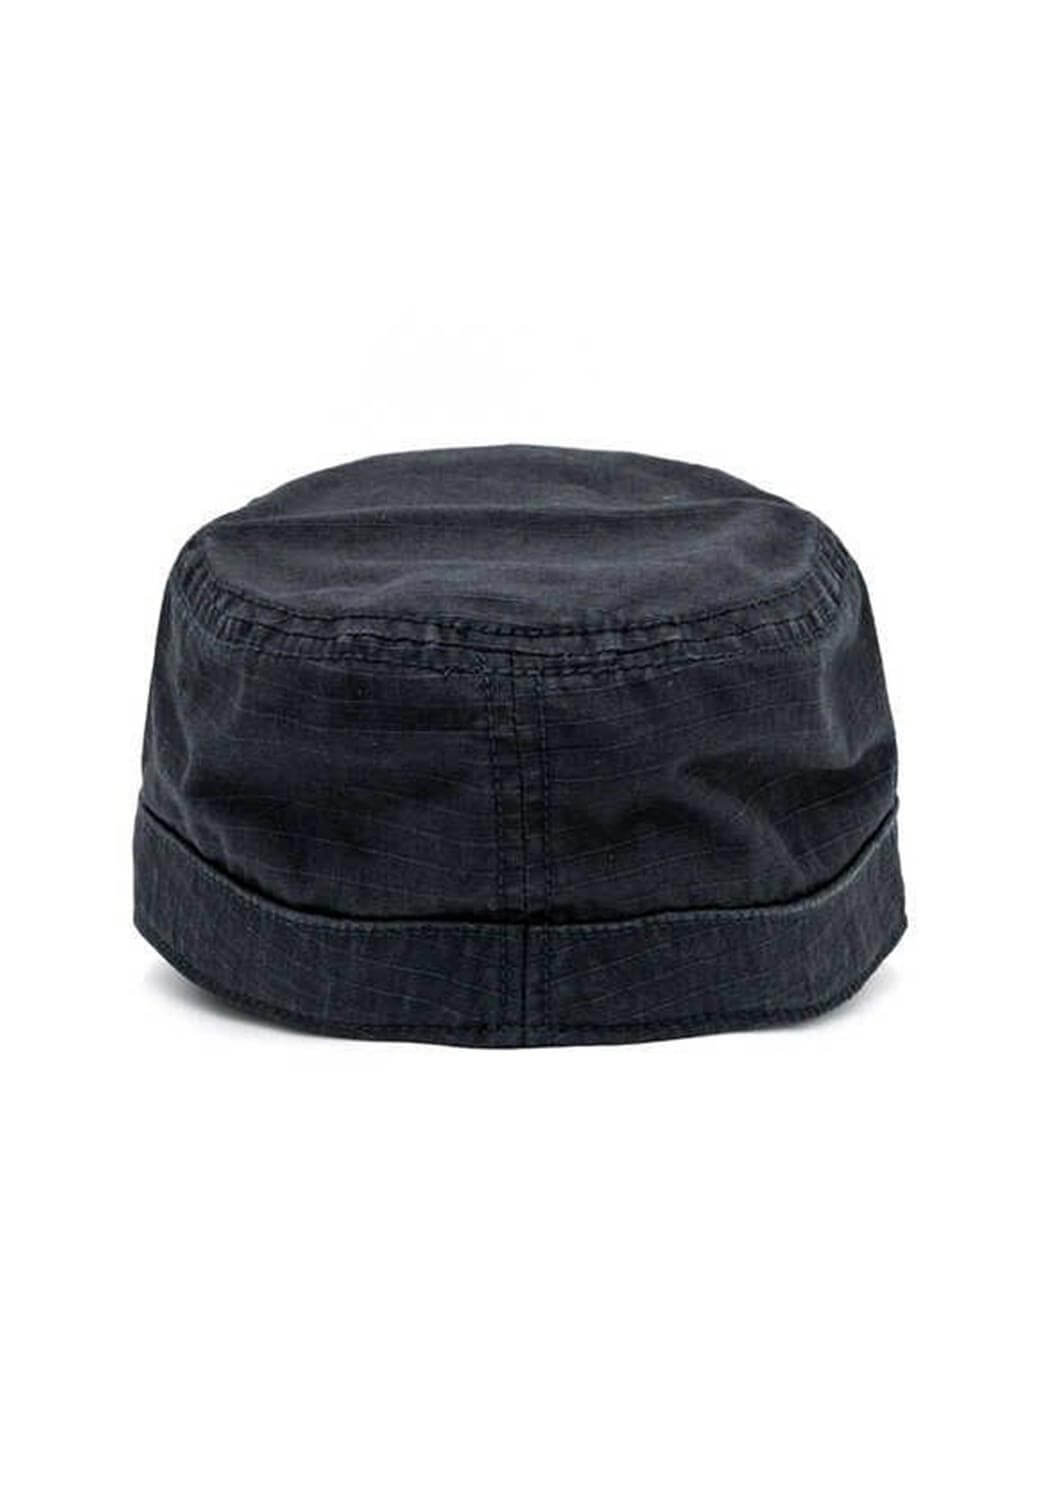 Dark Slate Gray Private כובע קסקט GOORIN